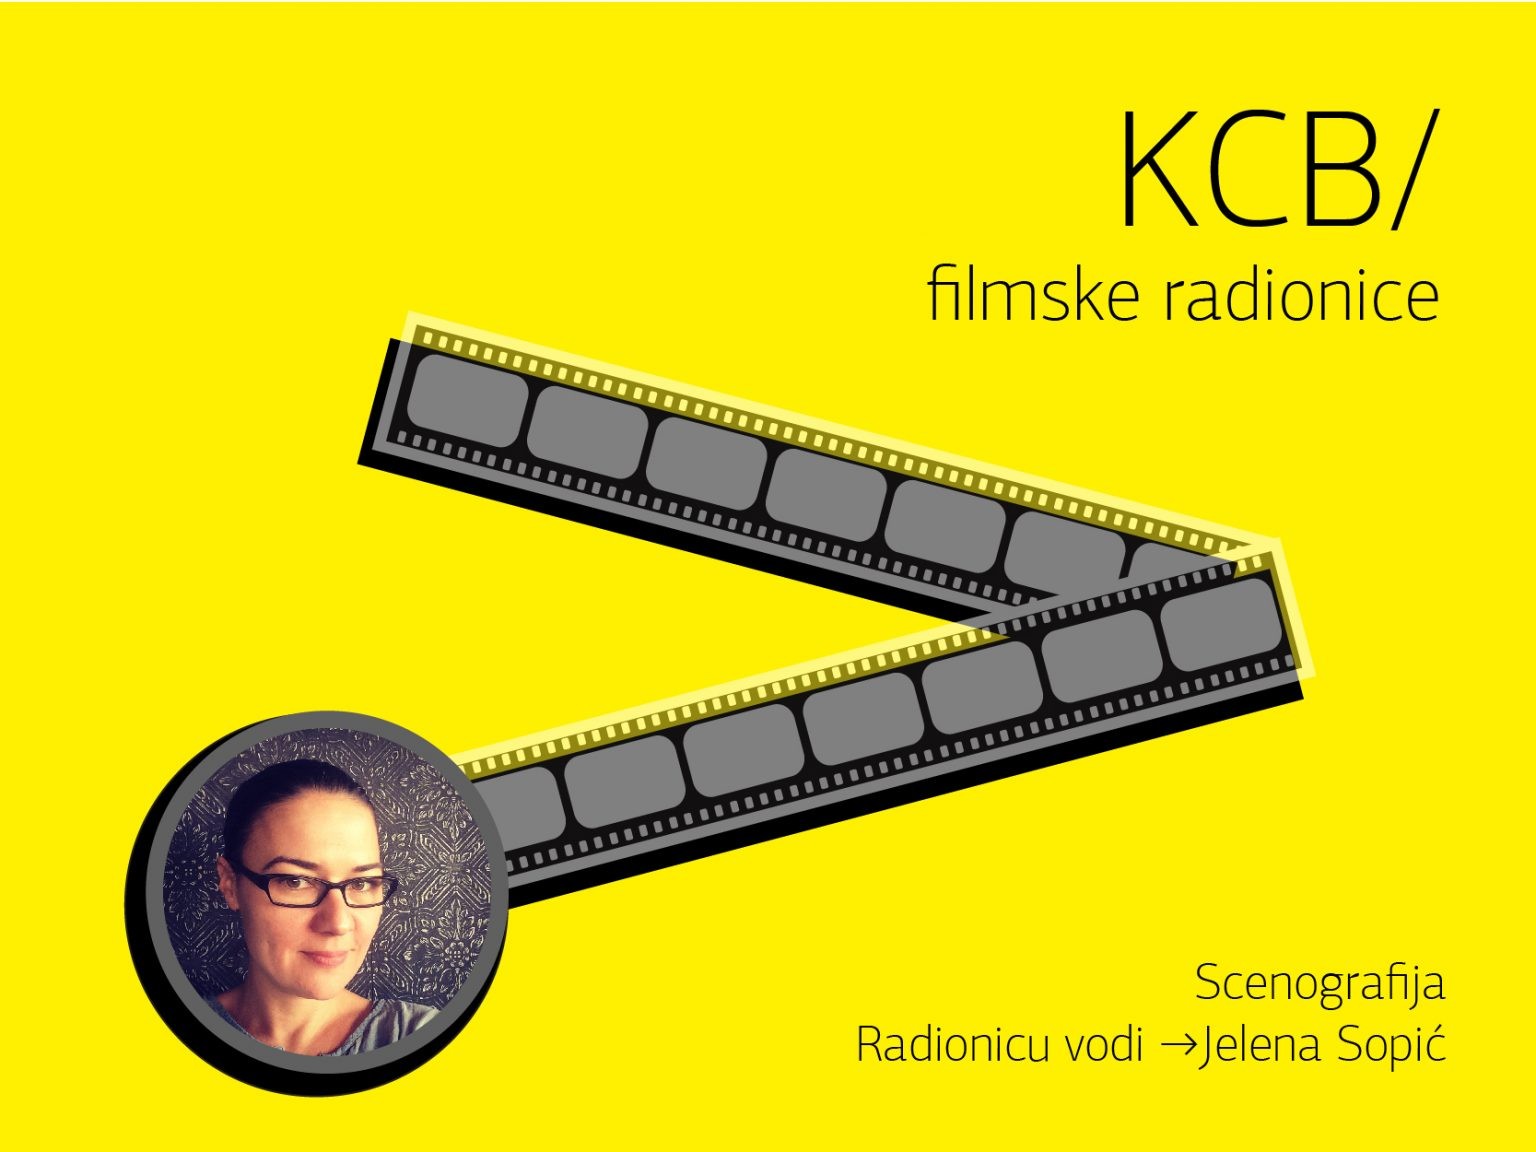 800x600 filmske radionice Jelena Sopic 08 kcb 1536x1152 1